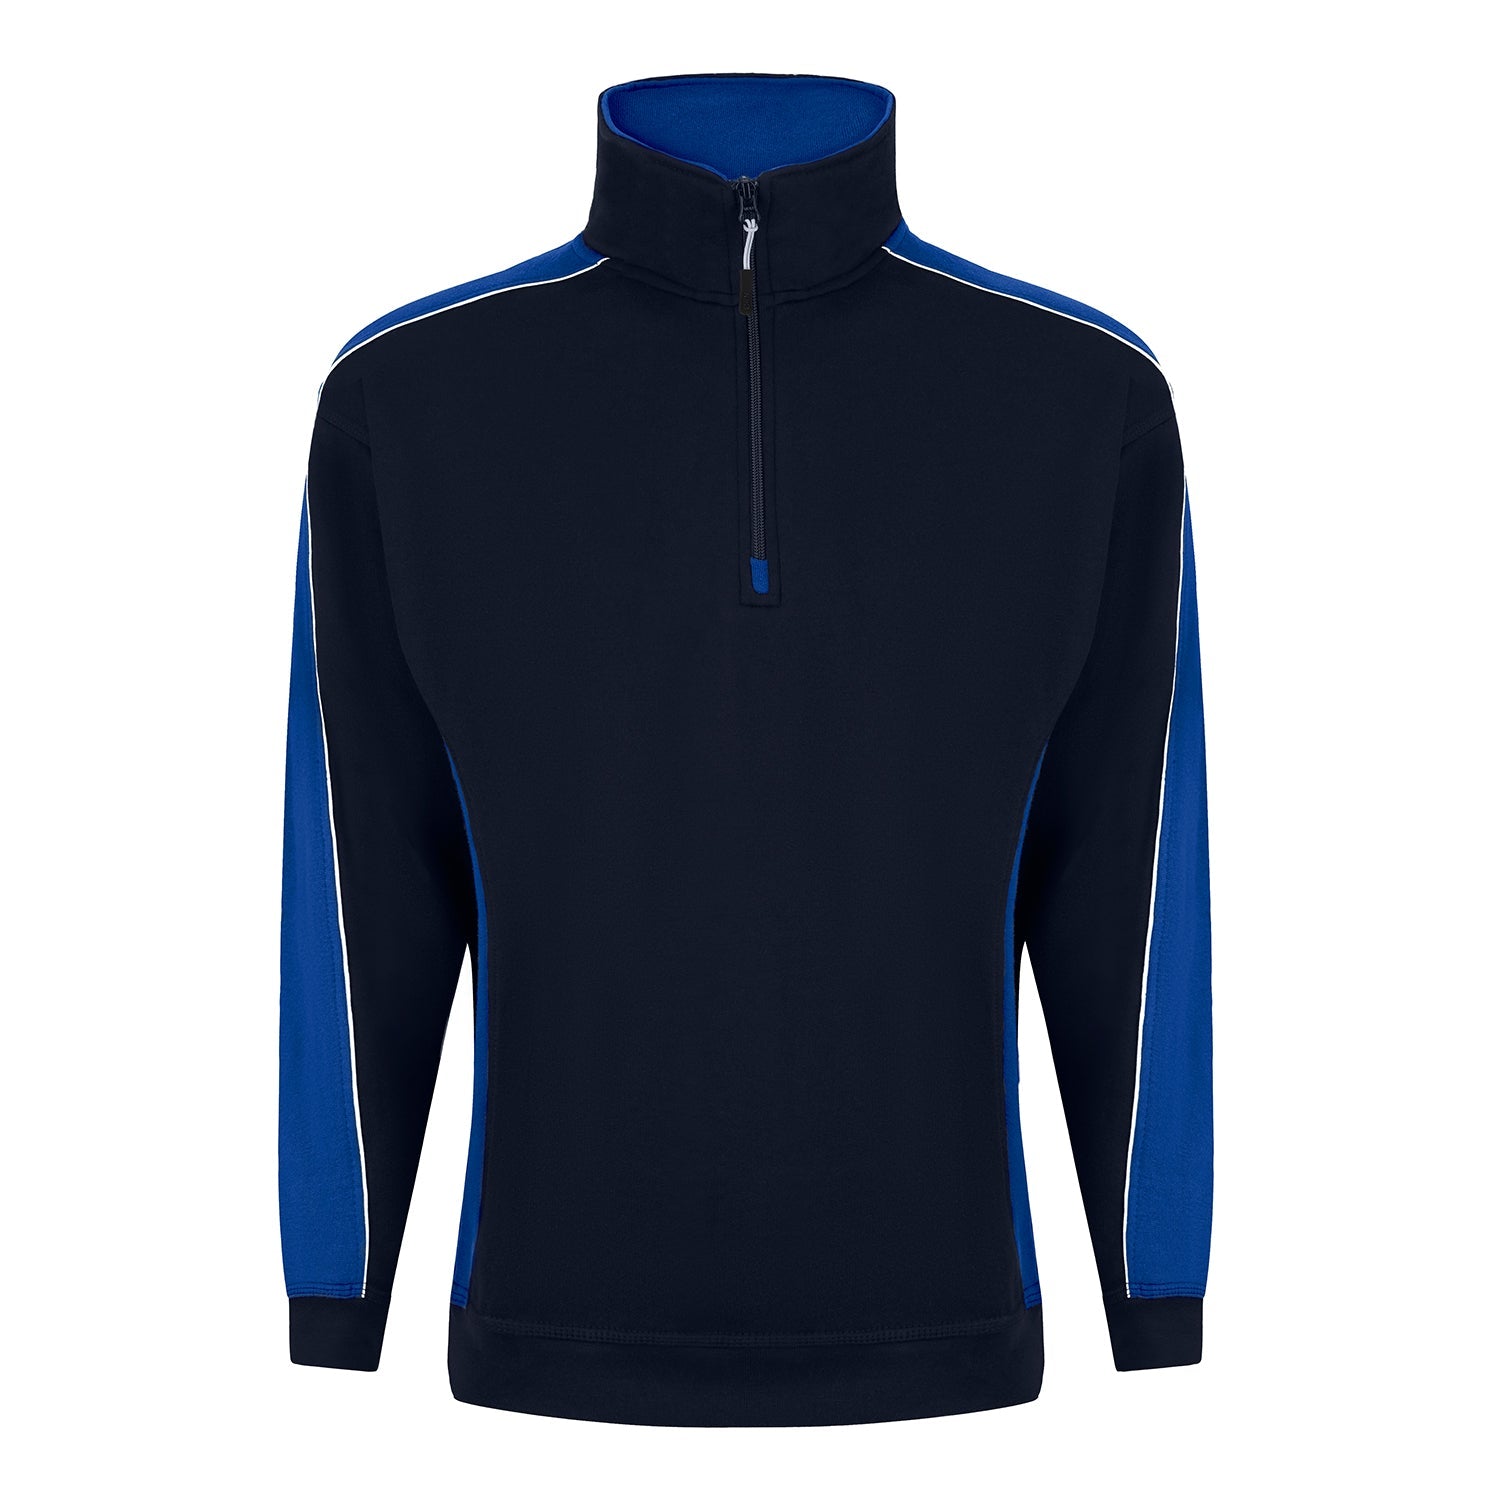 ORN Avocet 1/4 Zip Sweatshirt - Navy/Royal Blue